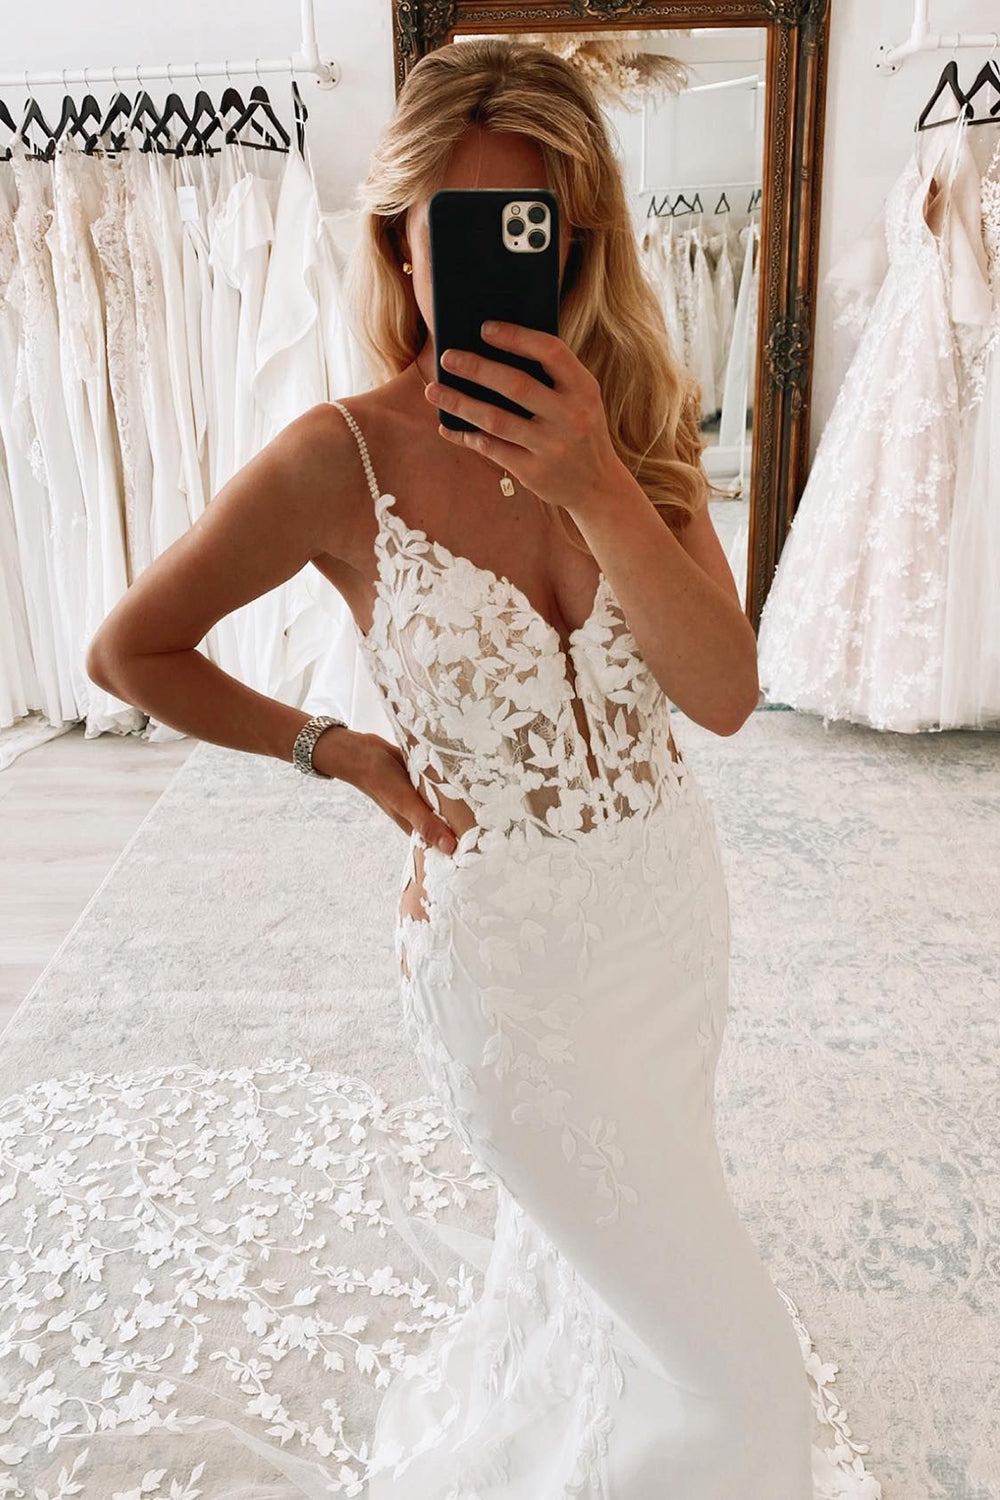 Taytum | White Spaghetti Straps Backless Long Wedding Dress with Lace